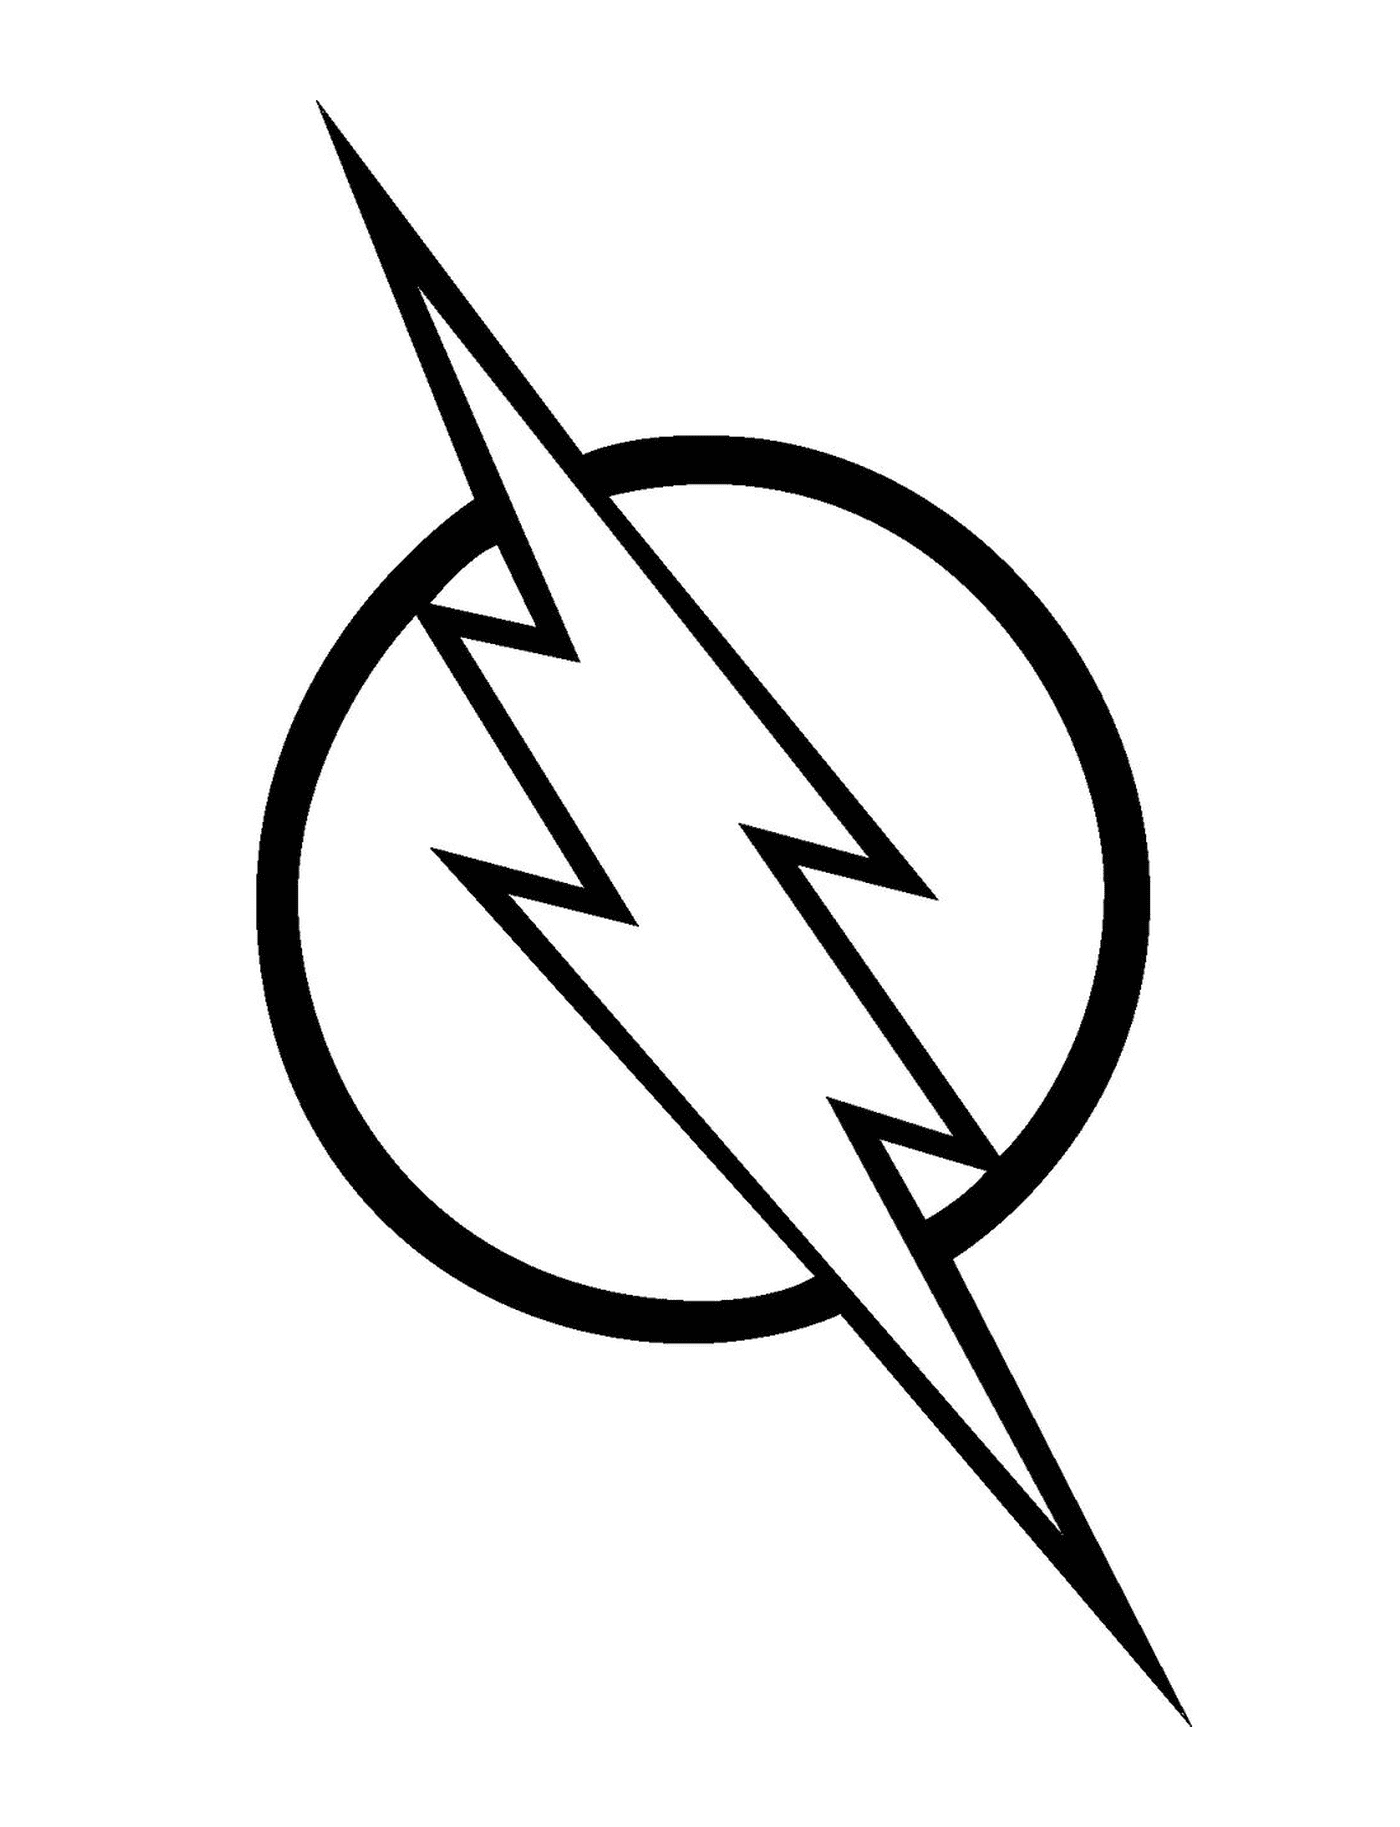  Логотип супергероя Флэша 